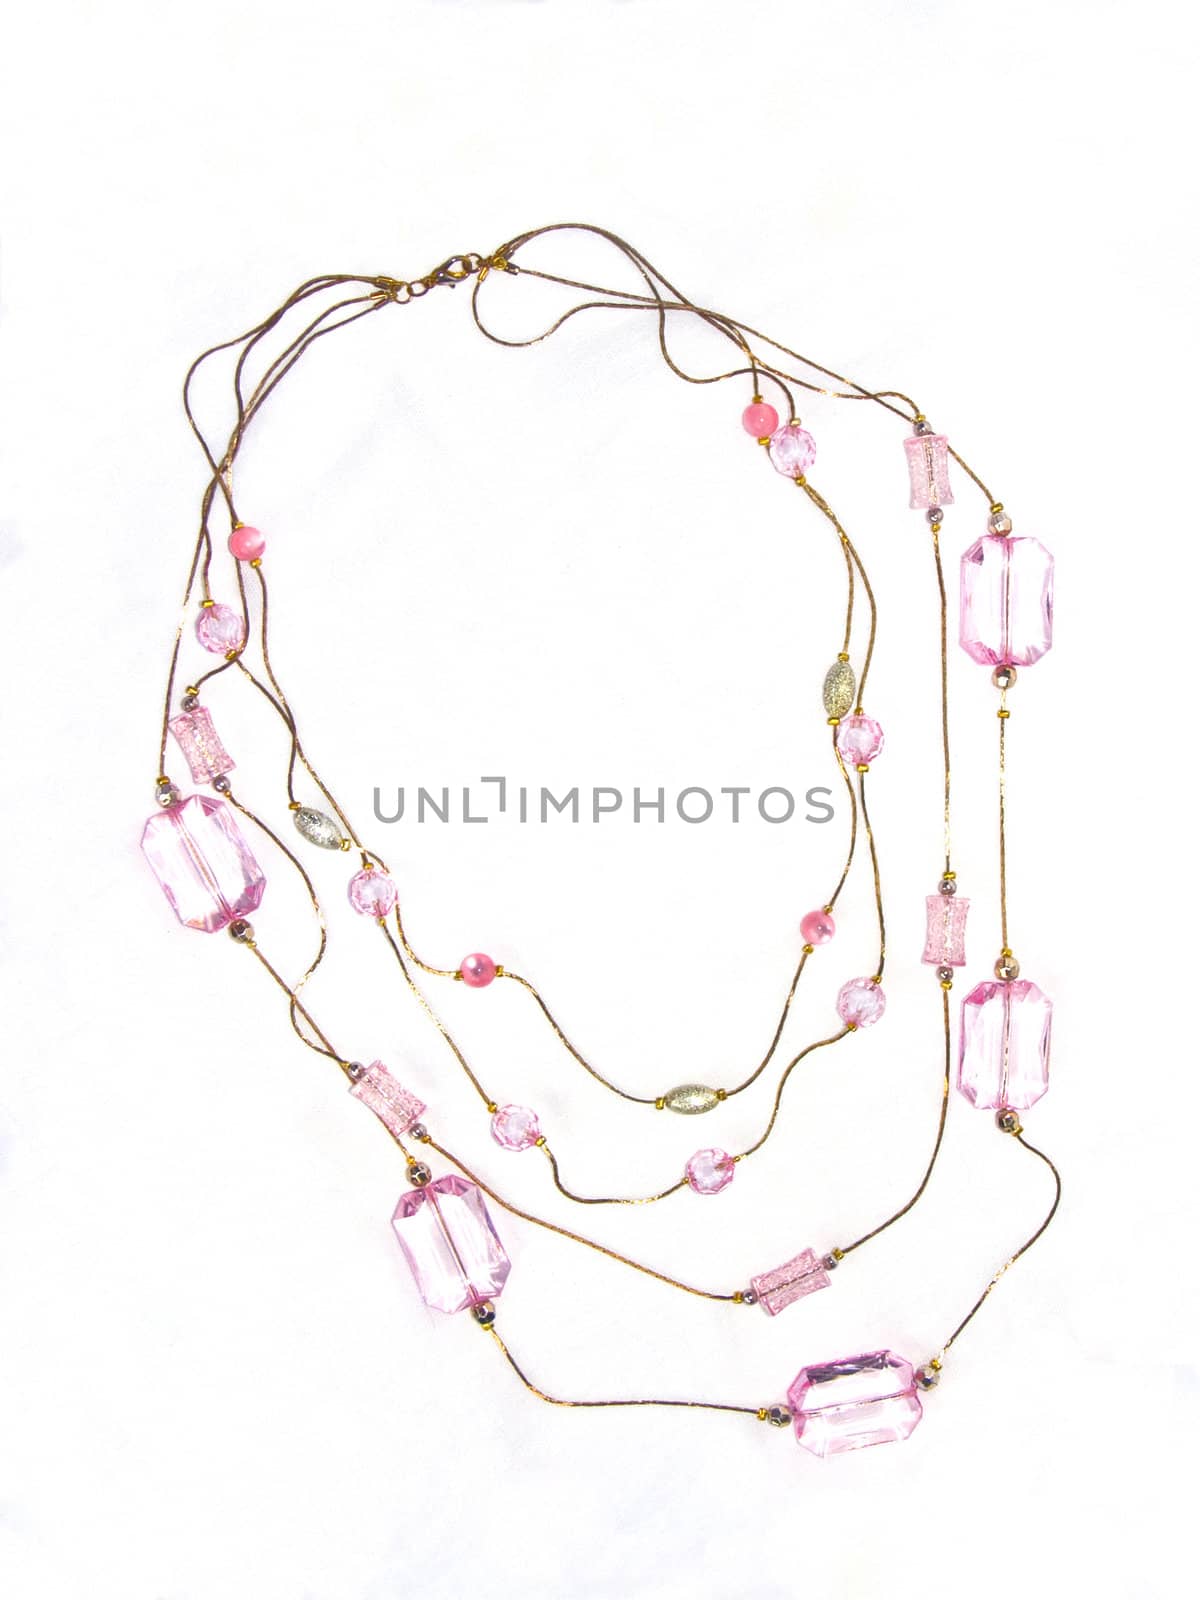 beads by soloir